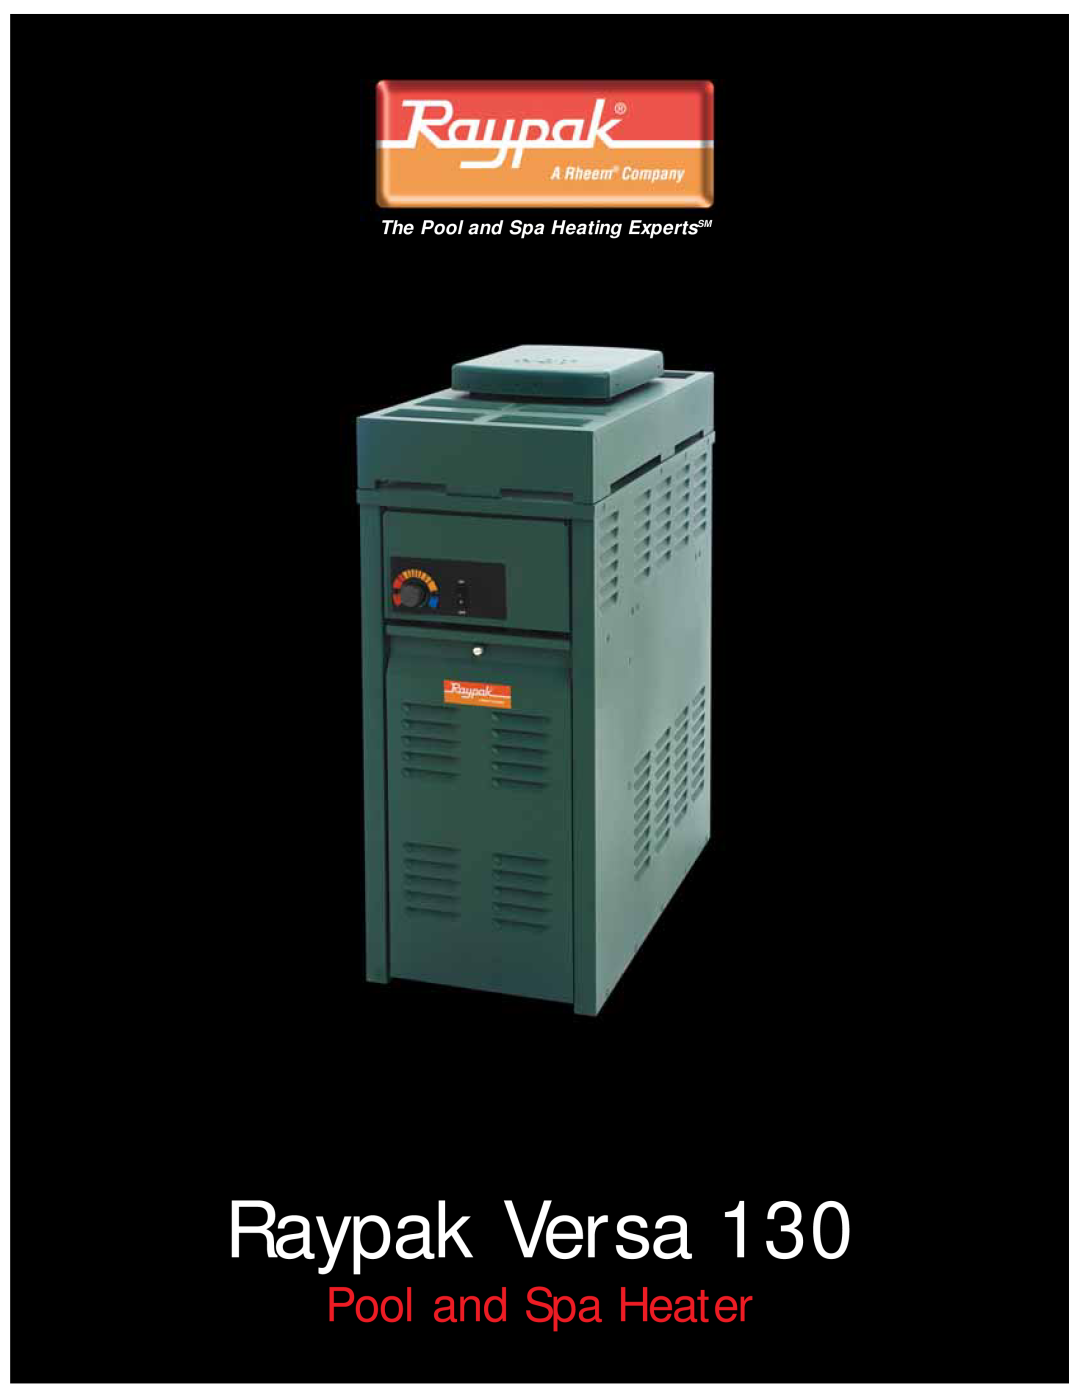 Raypak 130 manual Raypak Versa, Pool and Spa Heater, The Pool and Spa Heating ExpertsSM 